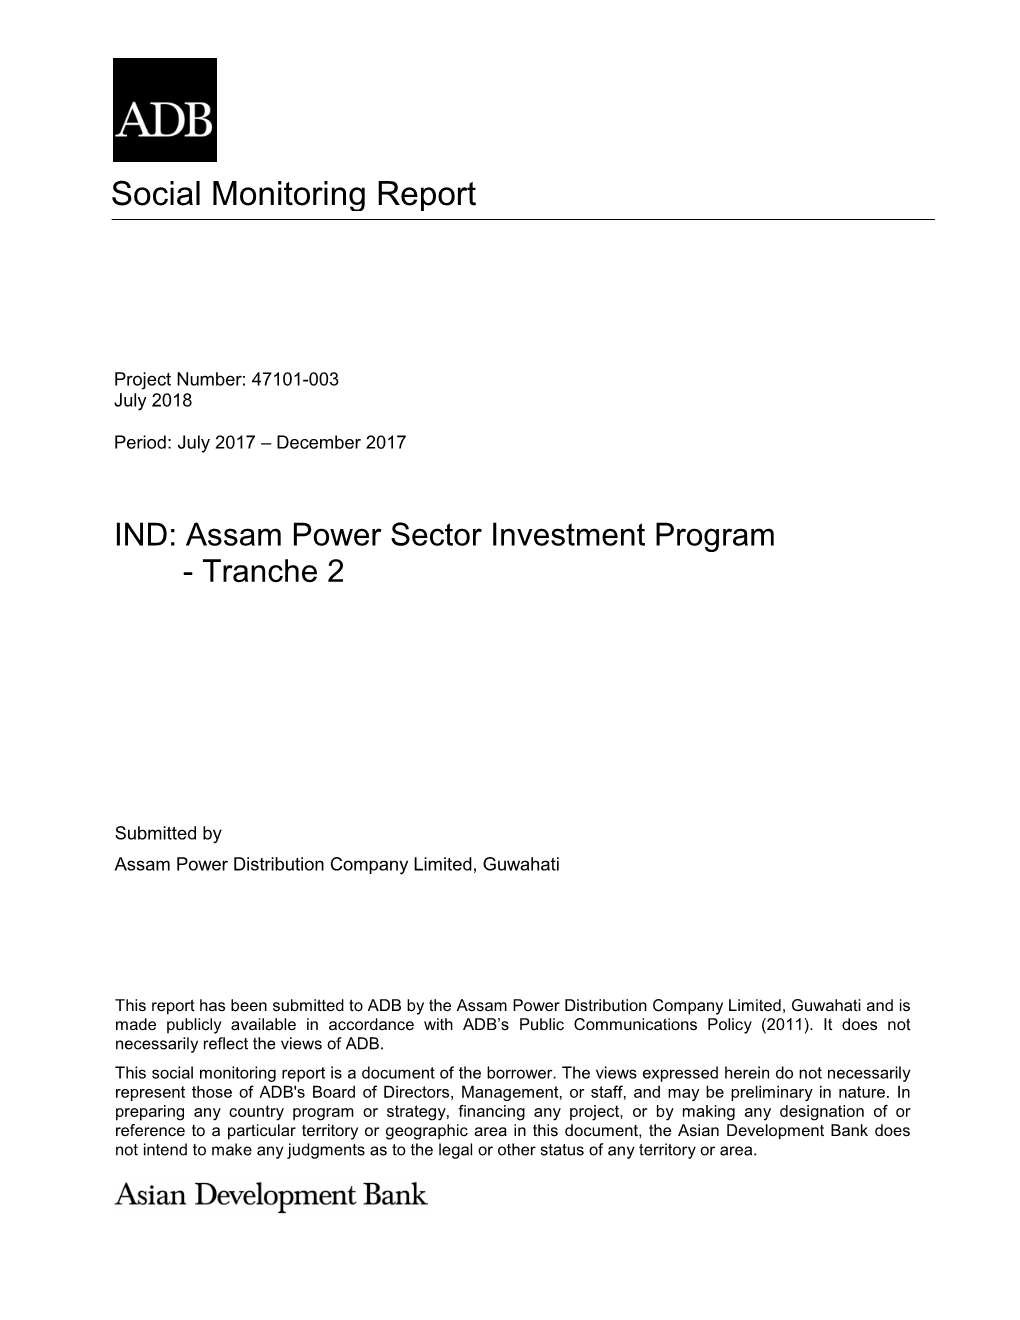 47101-003: Assam Power Sector Investment Program